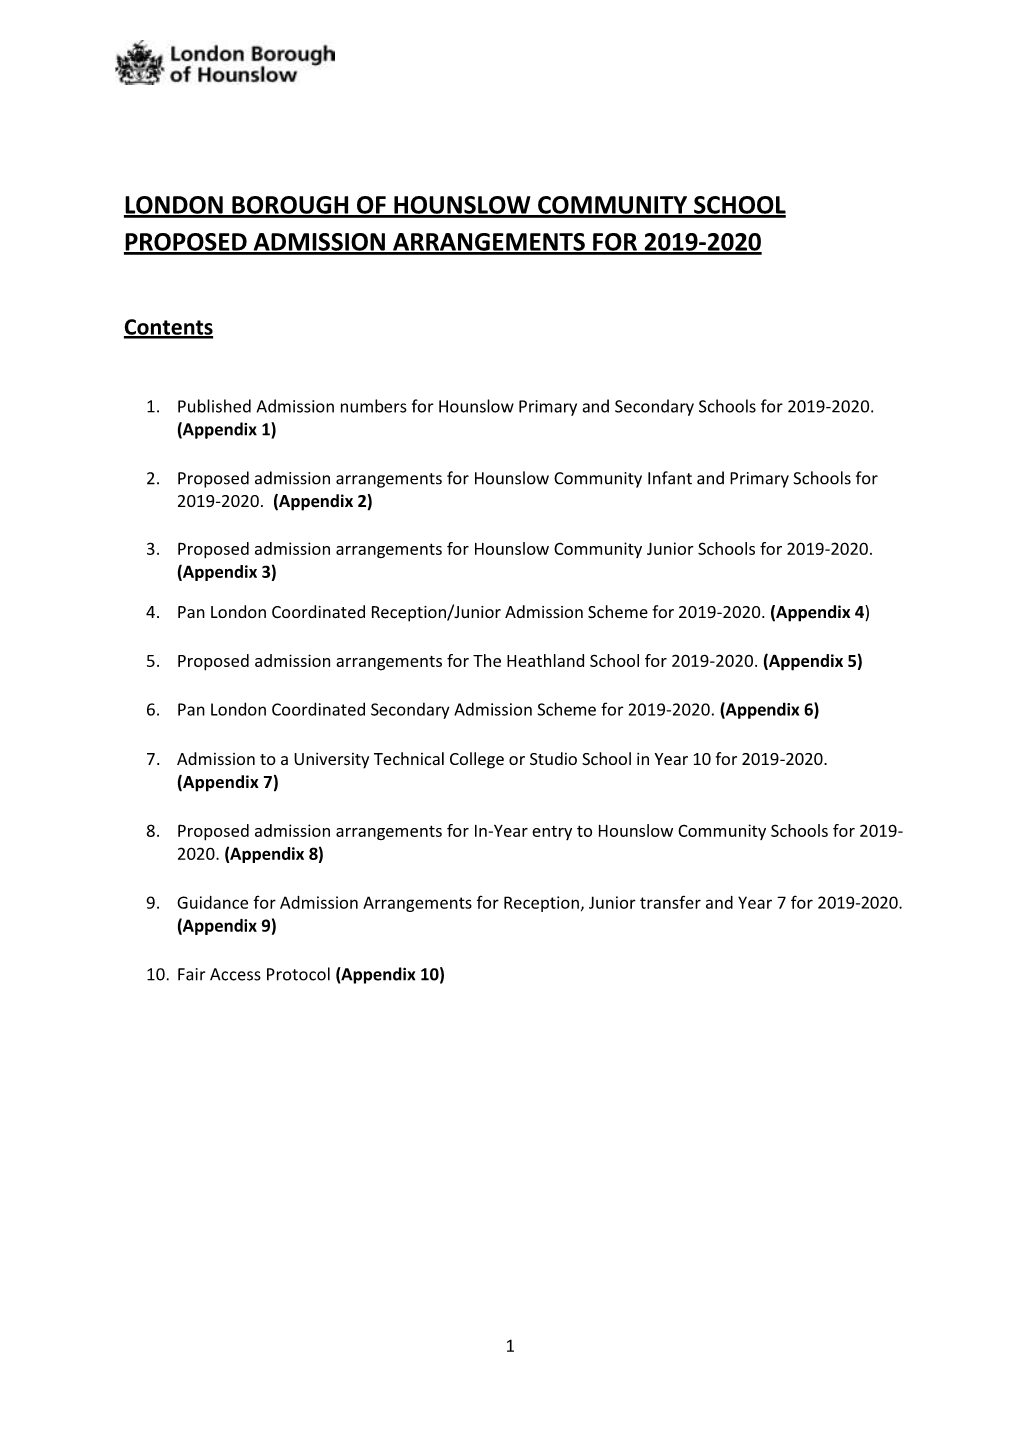 London Borough of Hounslow Community School Proposed Admission Arrangements for 2019-2020